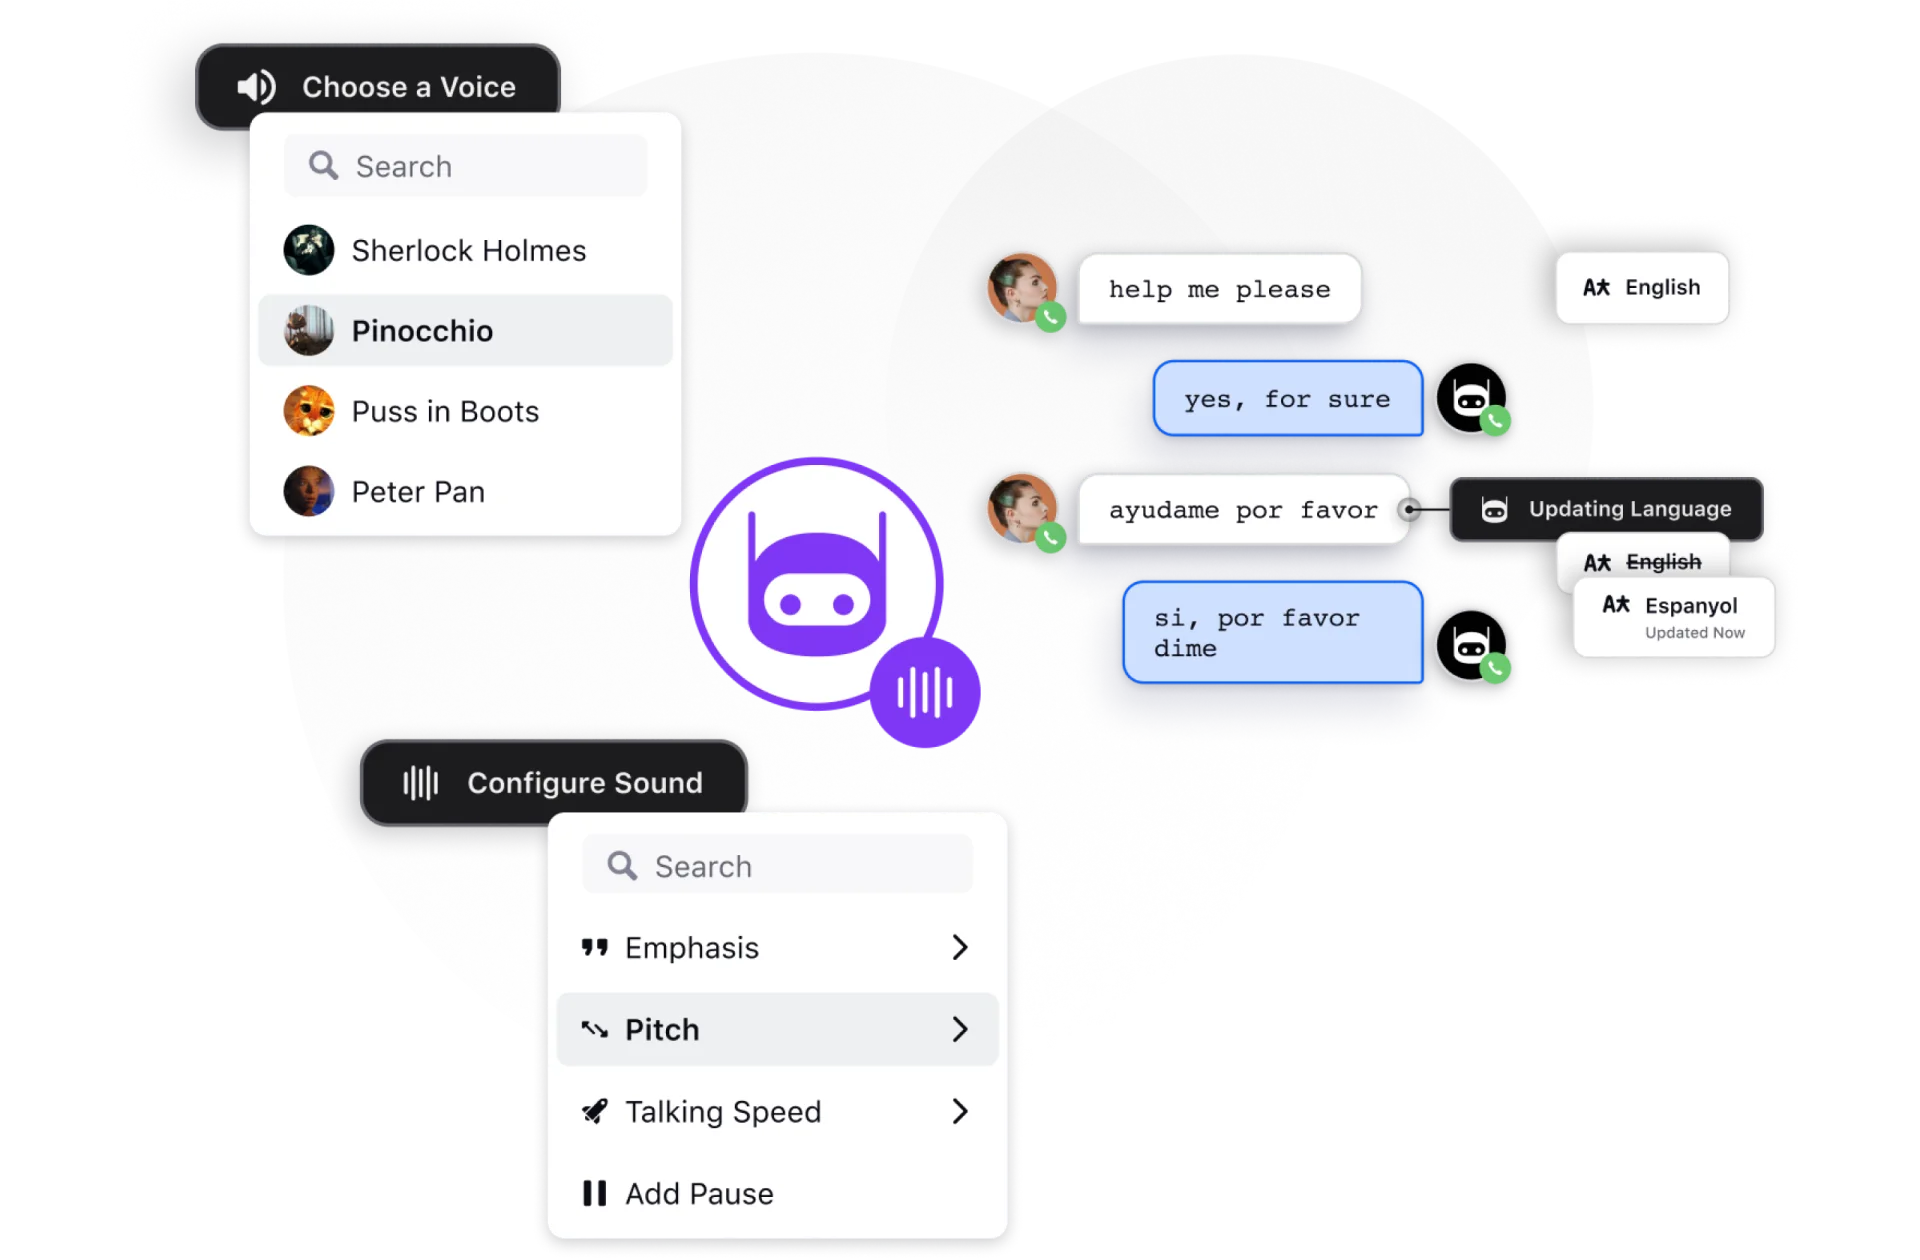 Voice customization in Sprinklr's voice bots